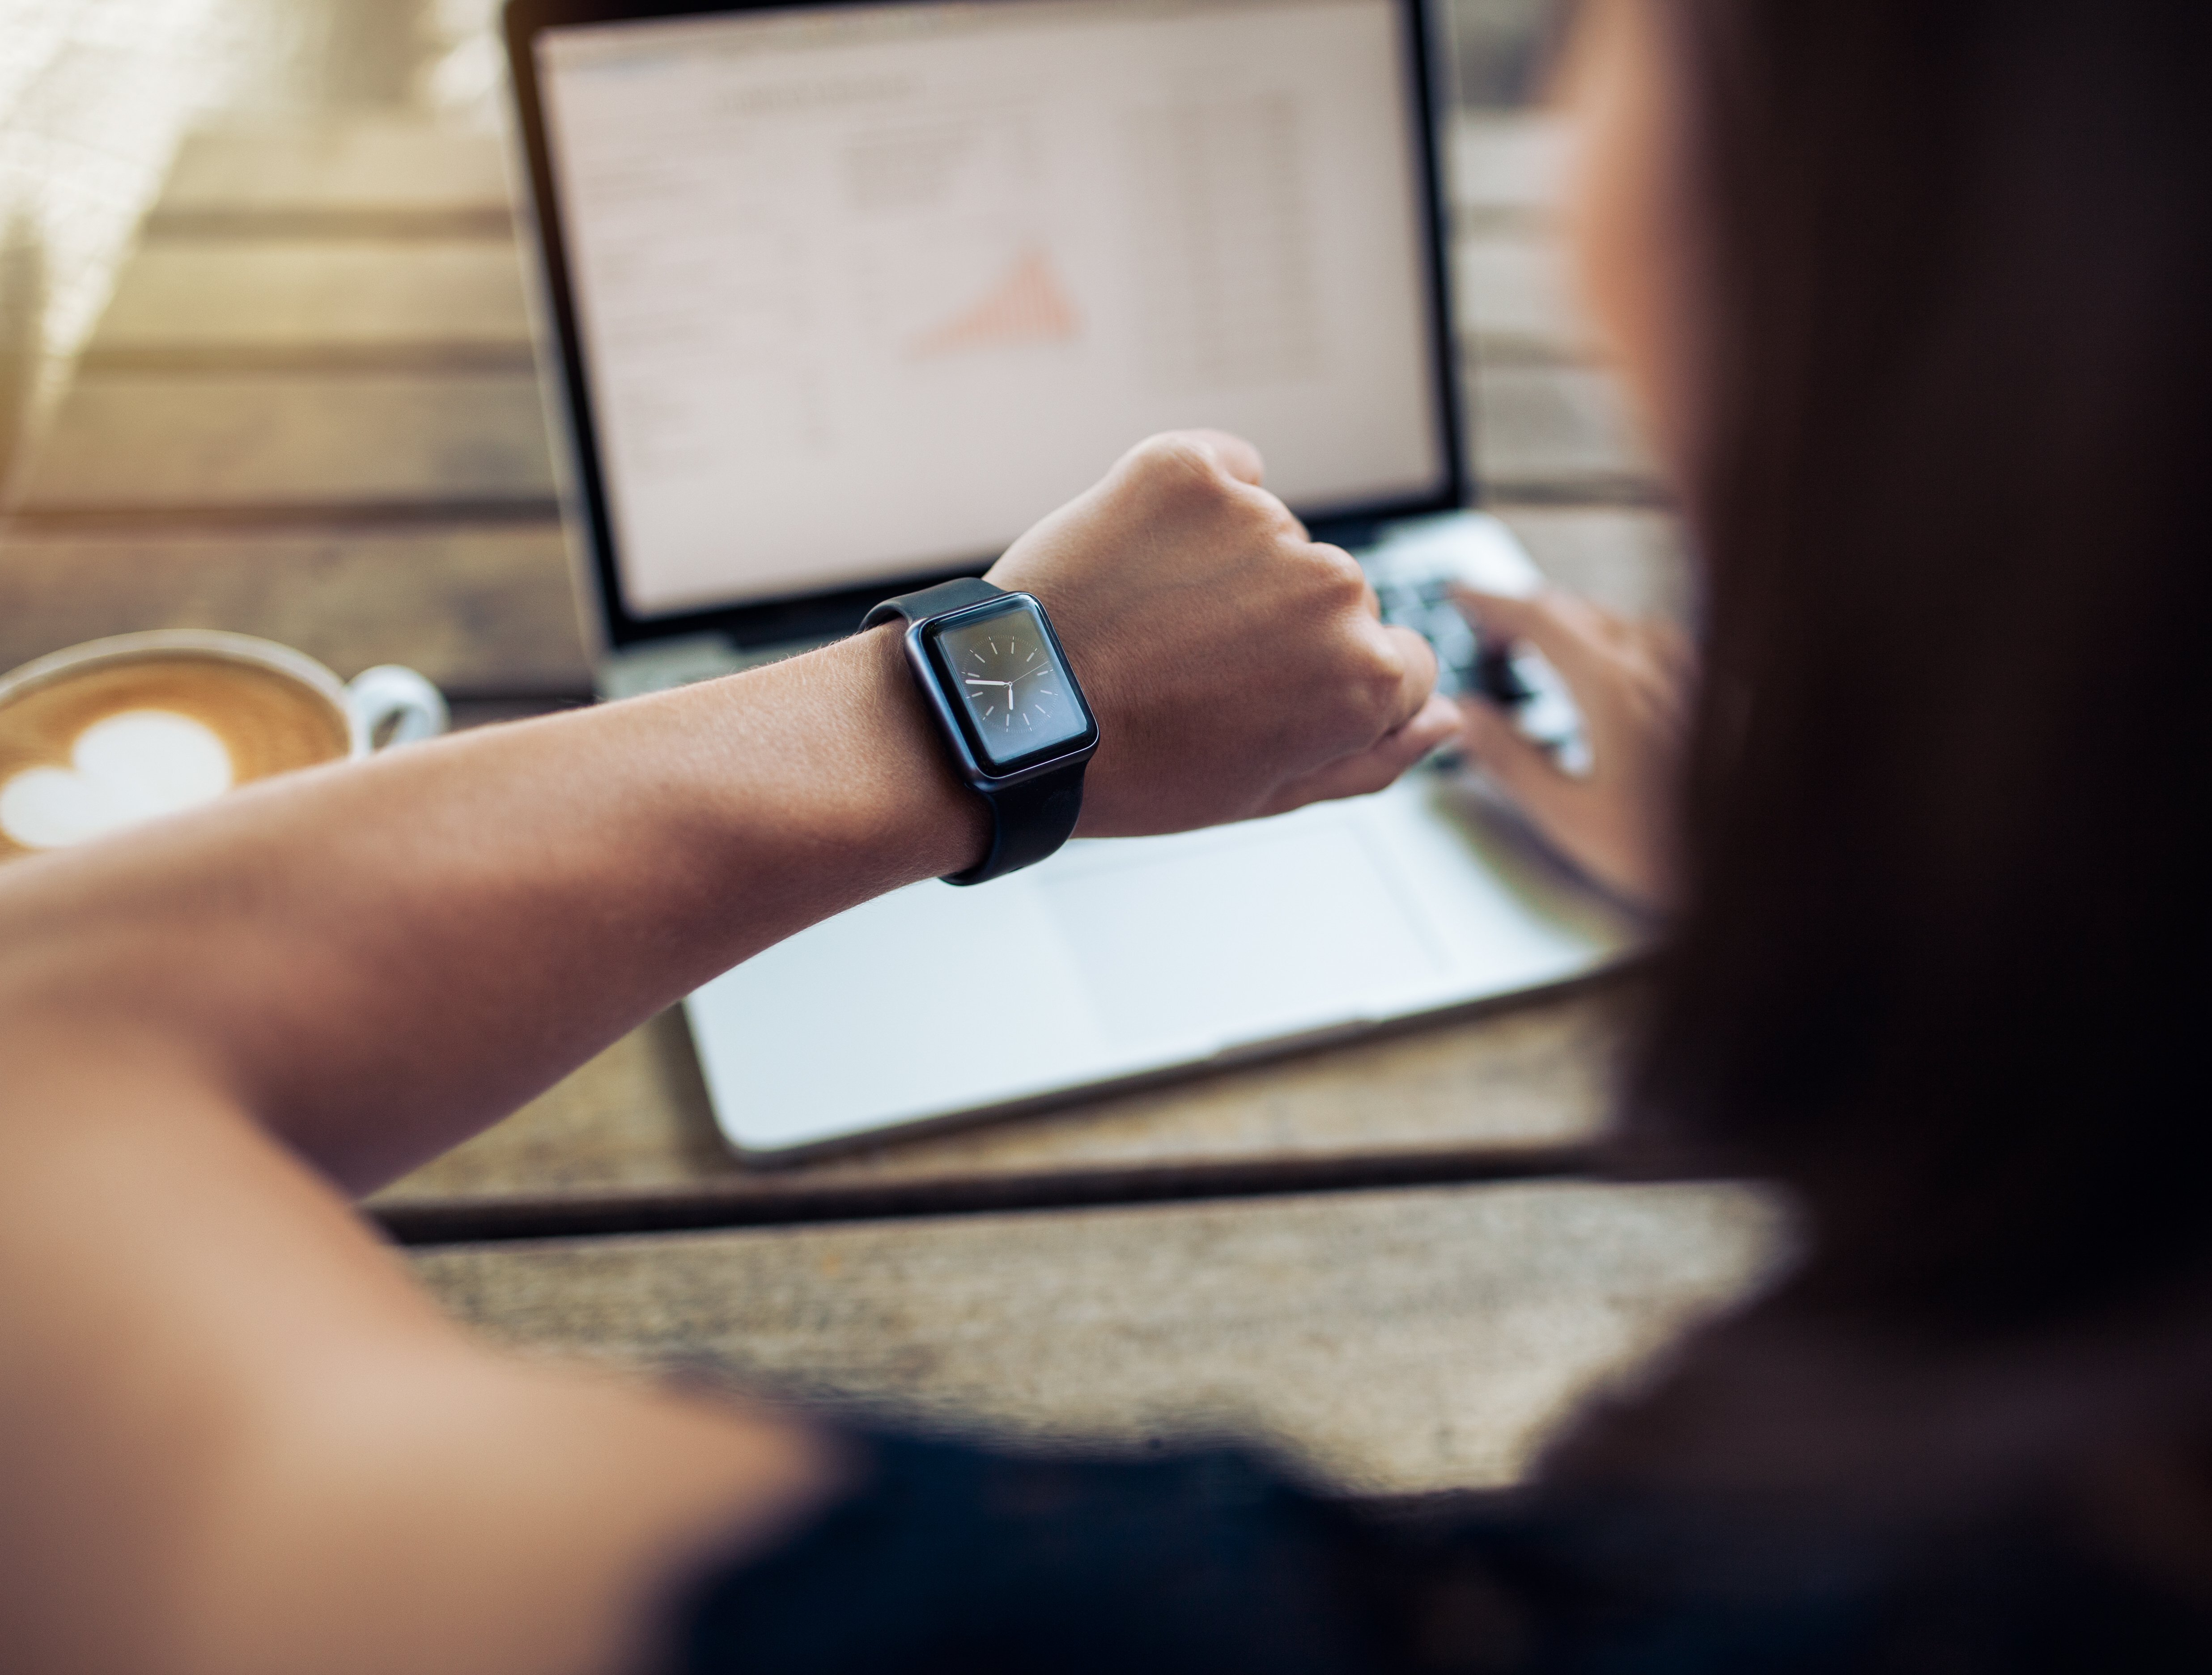 Mujer mira su reloj mientras trabaja | Foto: Shutterstock